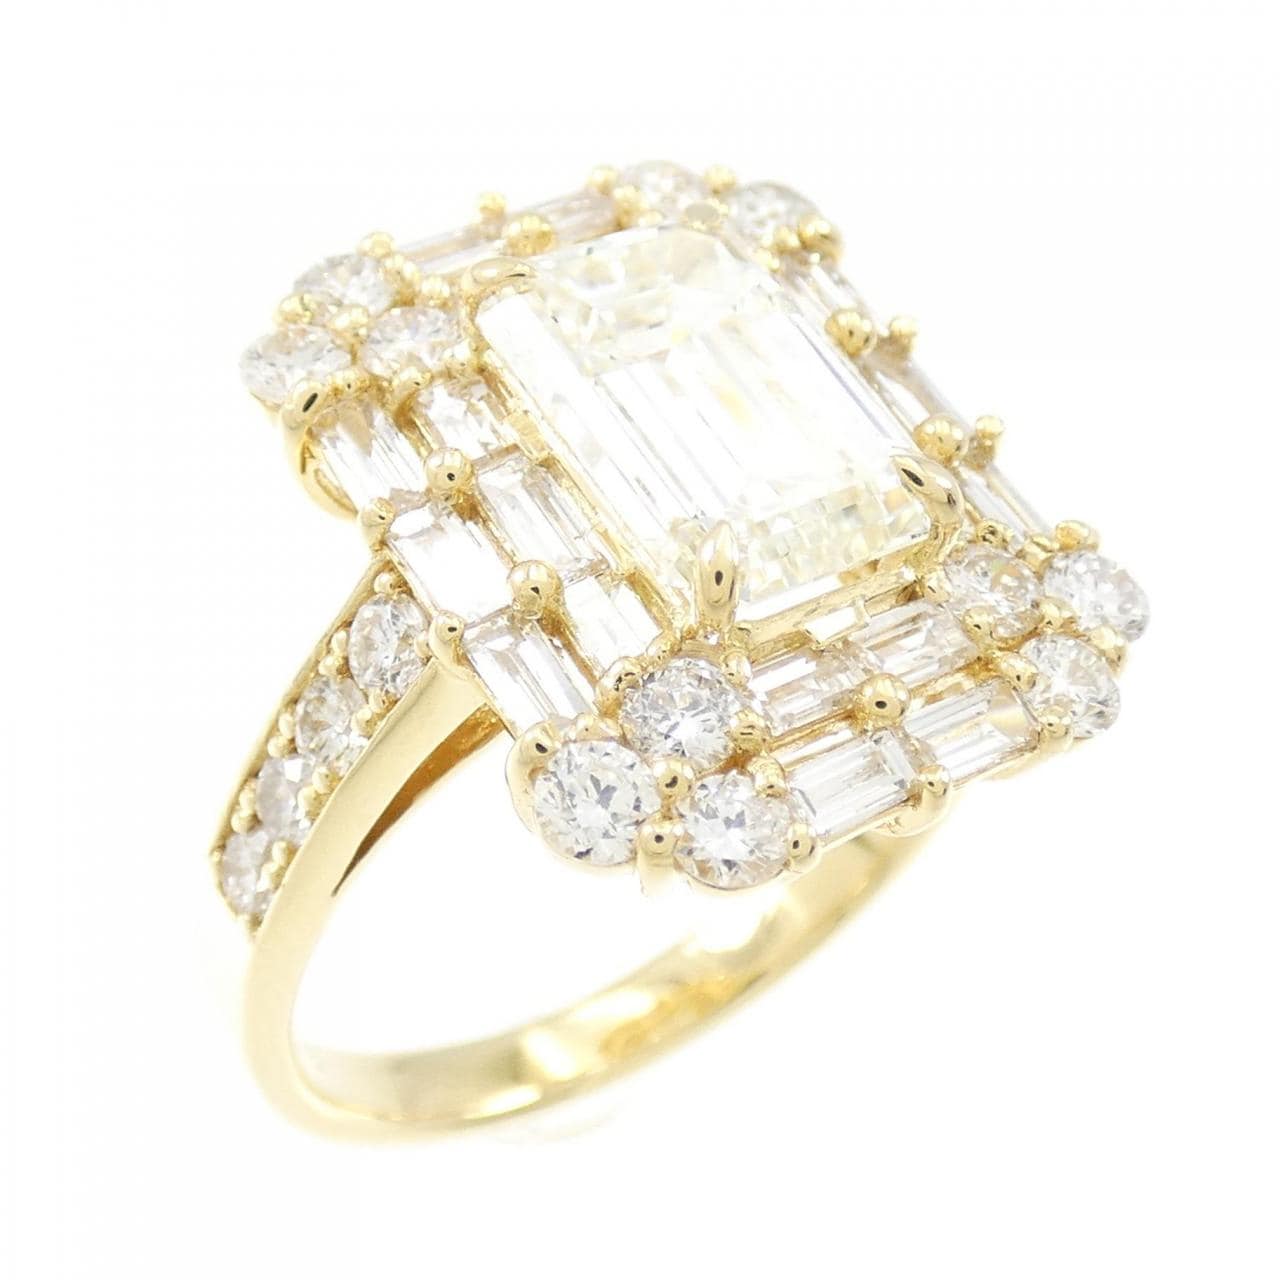 [Remake] K18YG Diamond ring 2.063CT L VS2 emerald cut